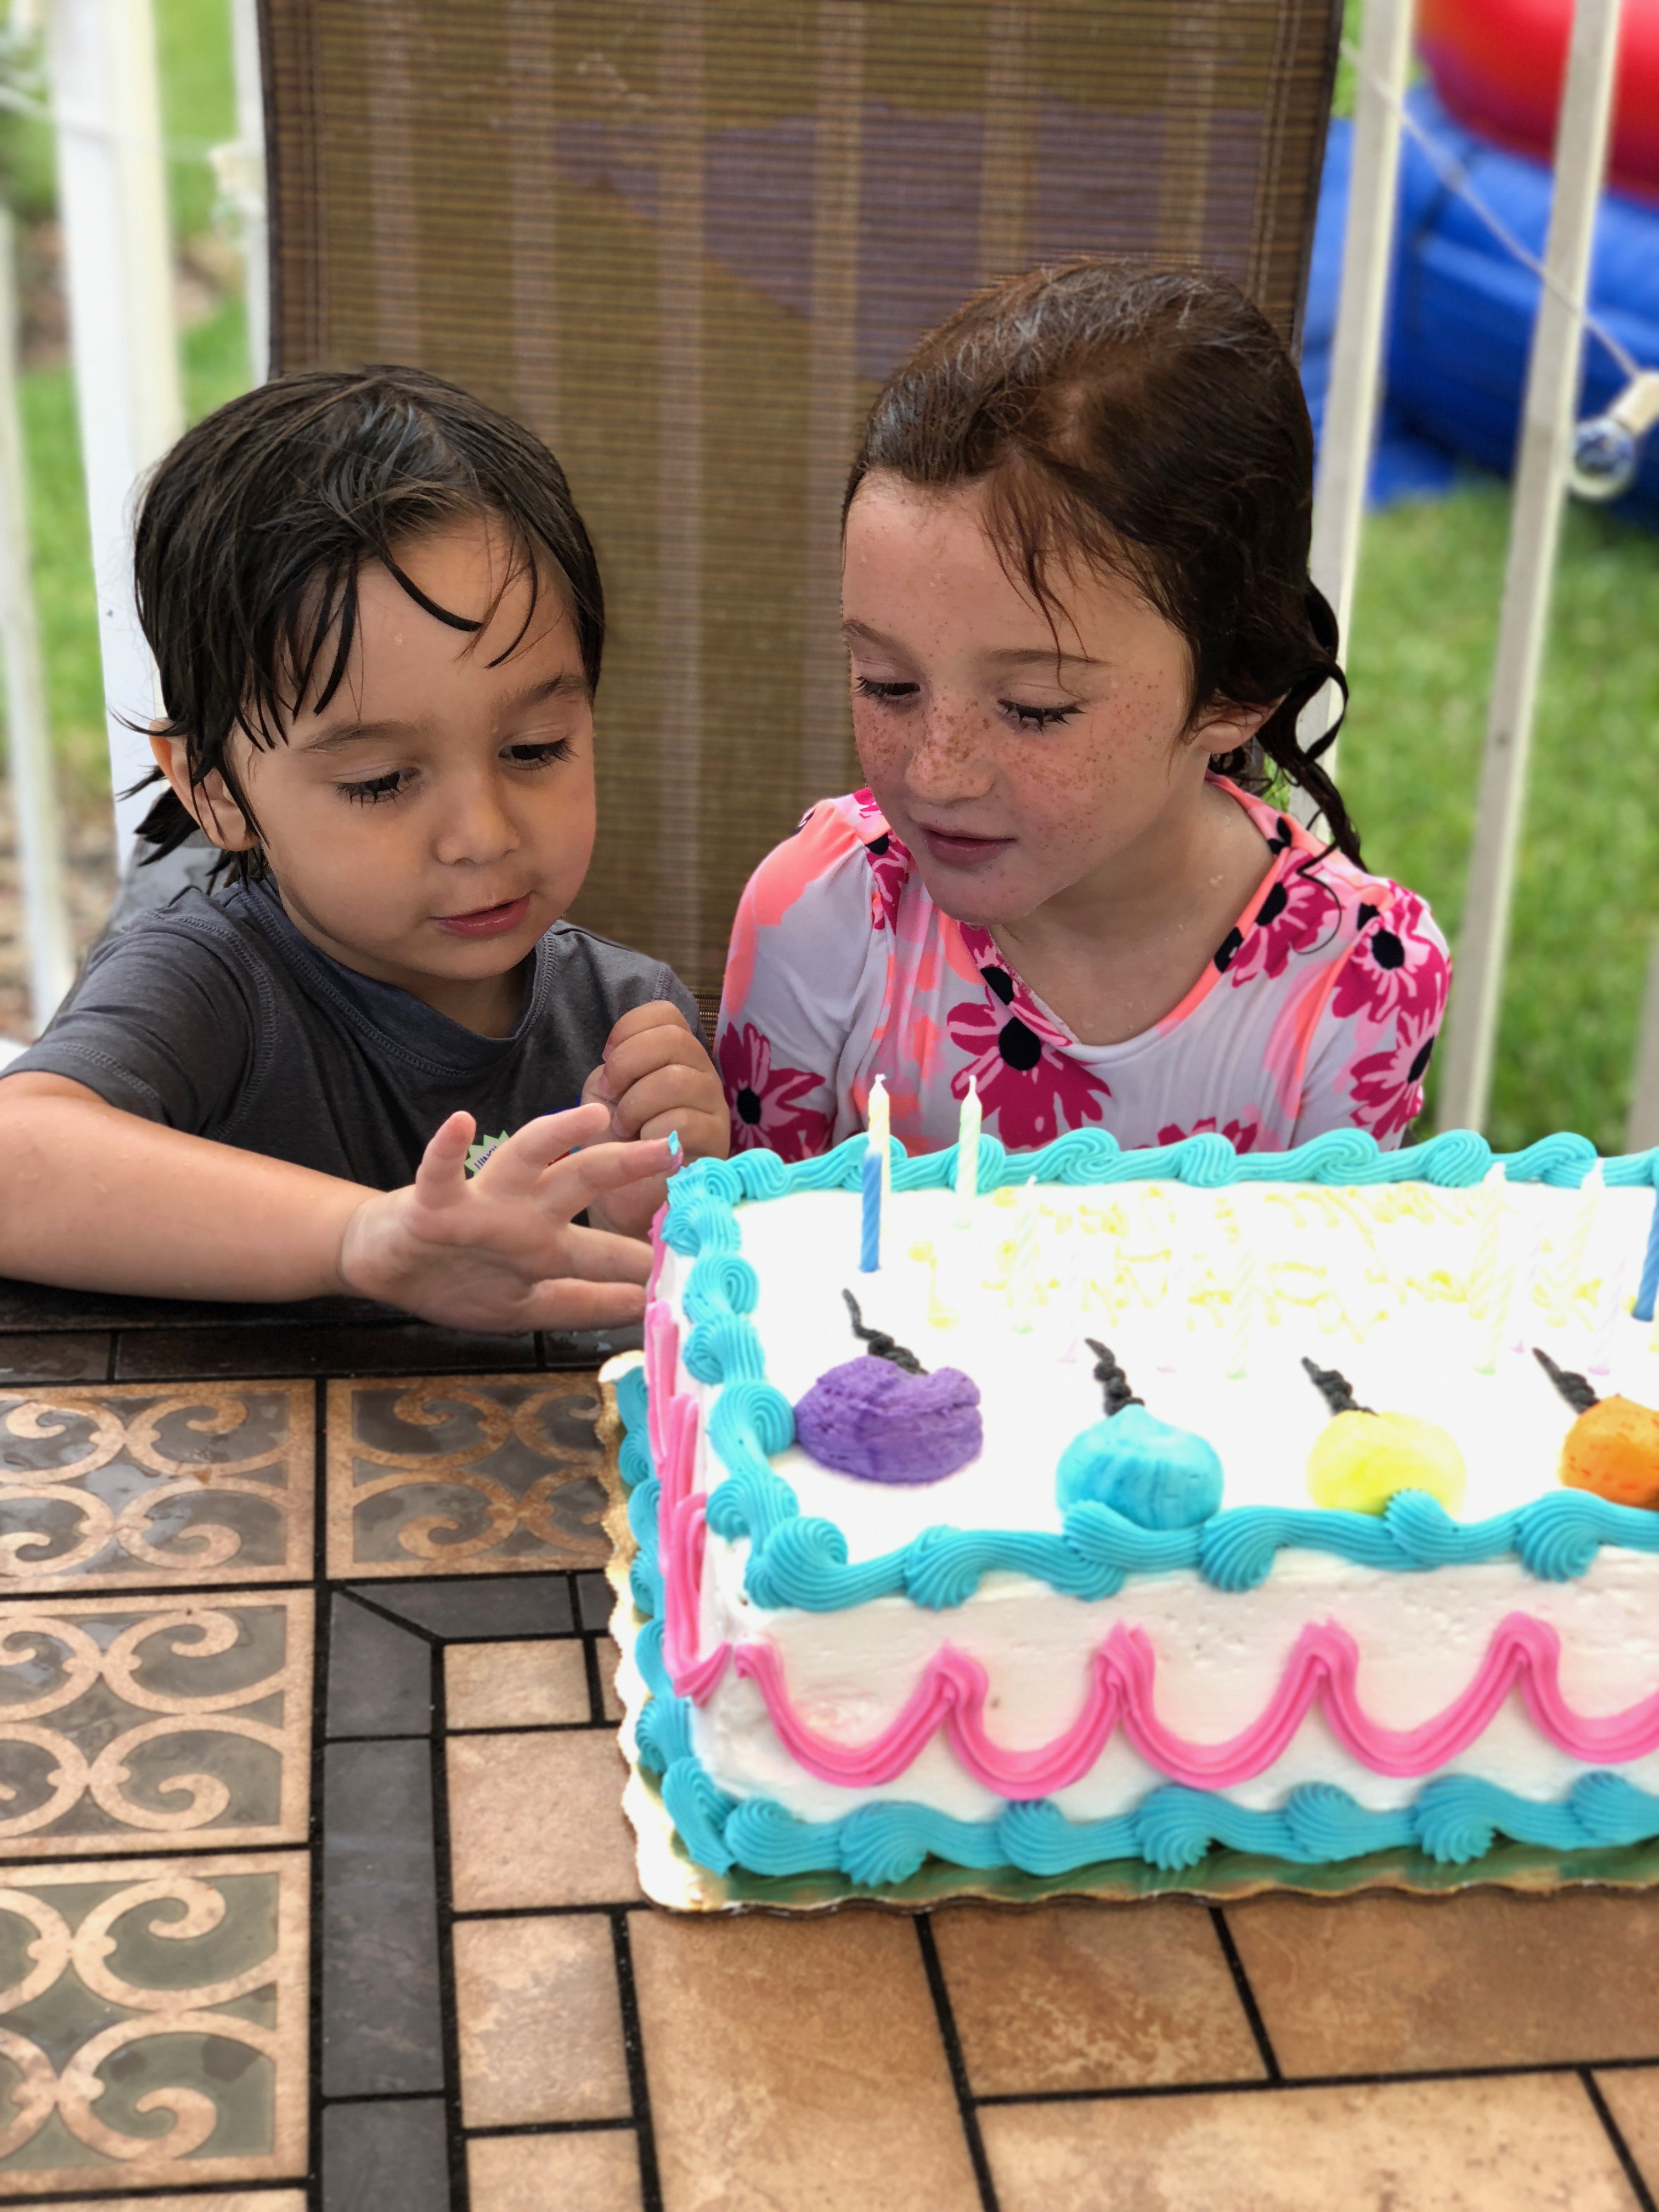 throw a birthday party at Legoland